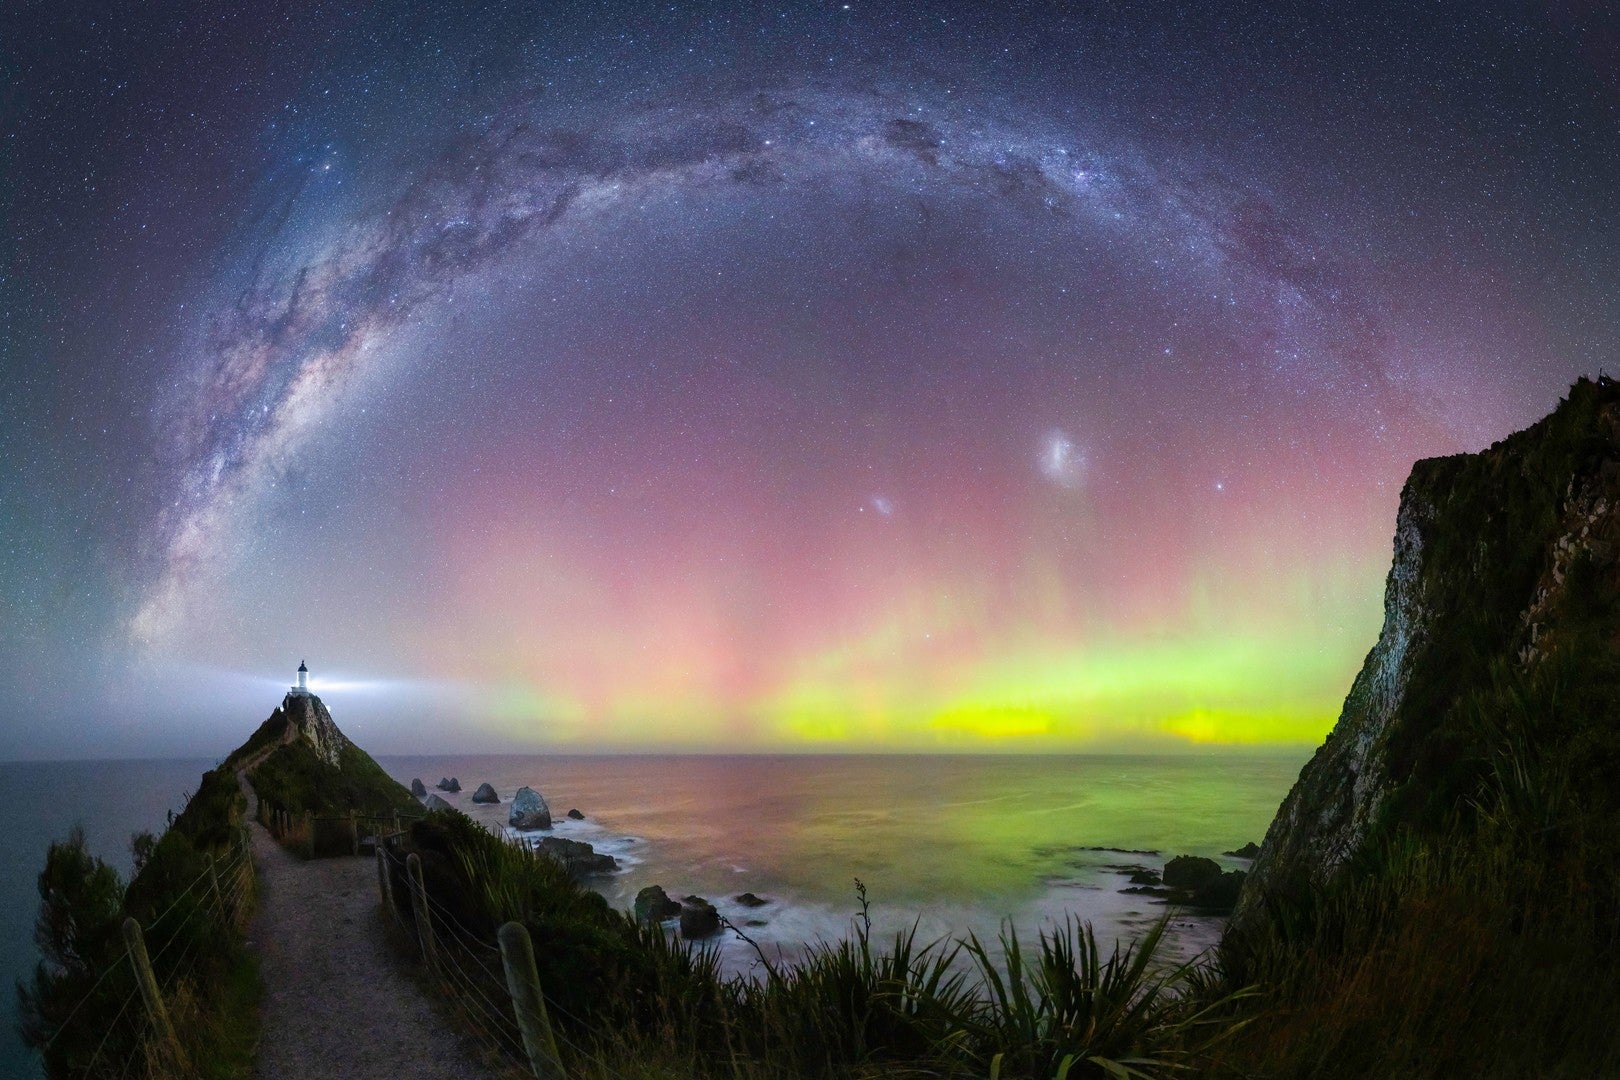 A pinkish-yellow aurora over New Zealand. (Photo: Douglas Thorne)